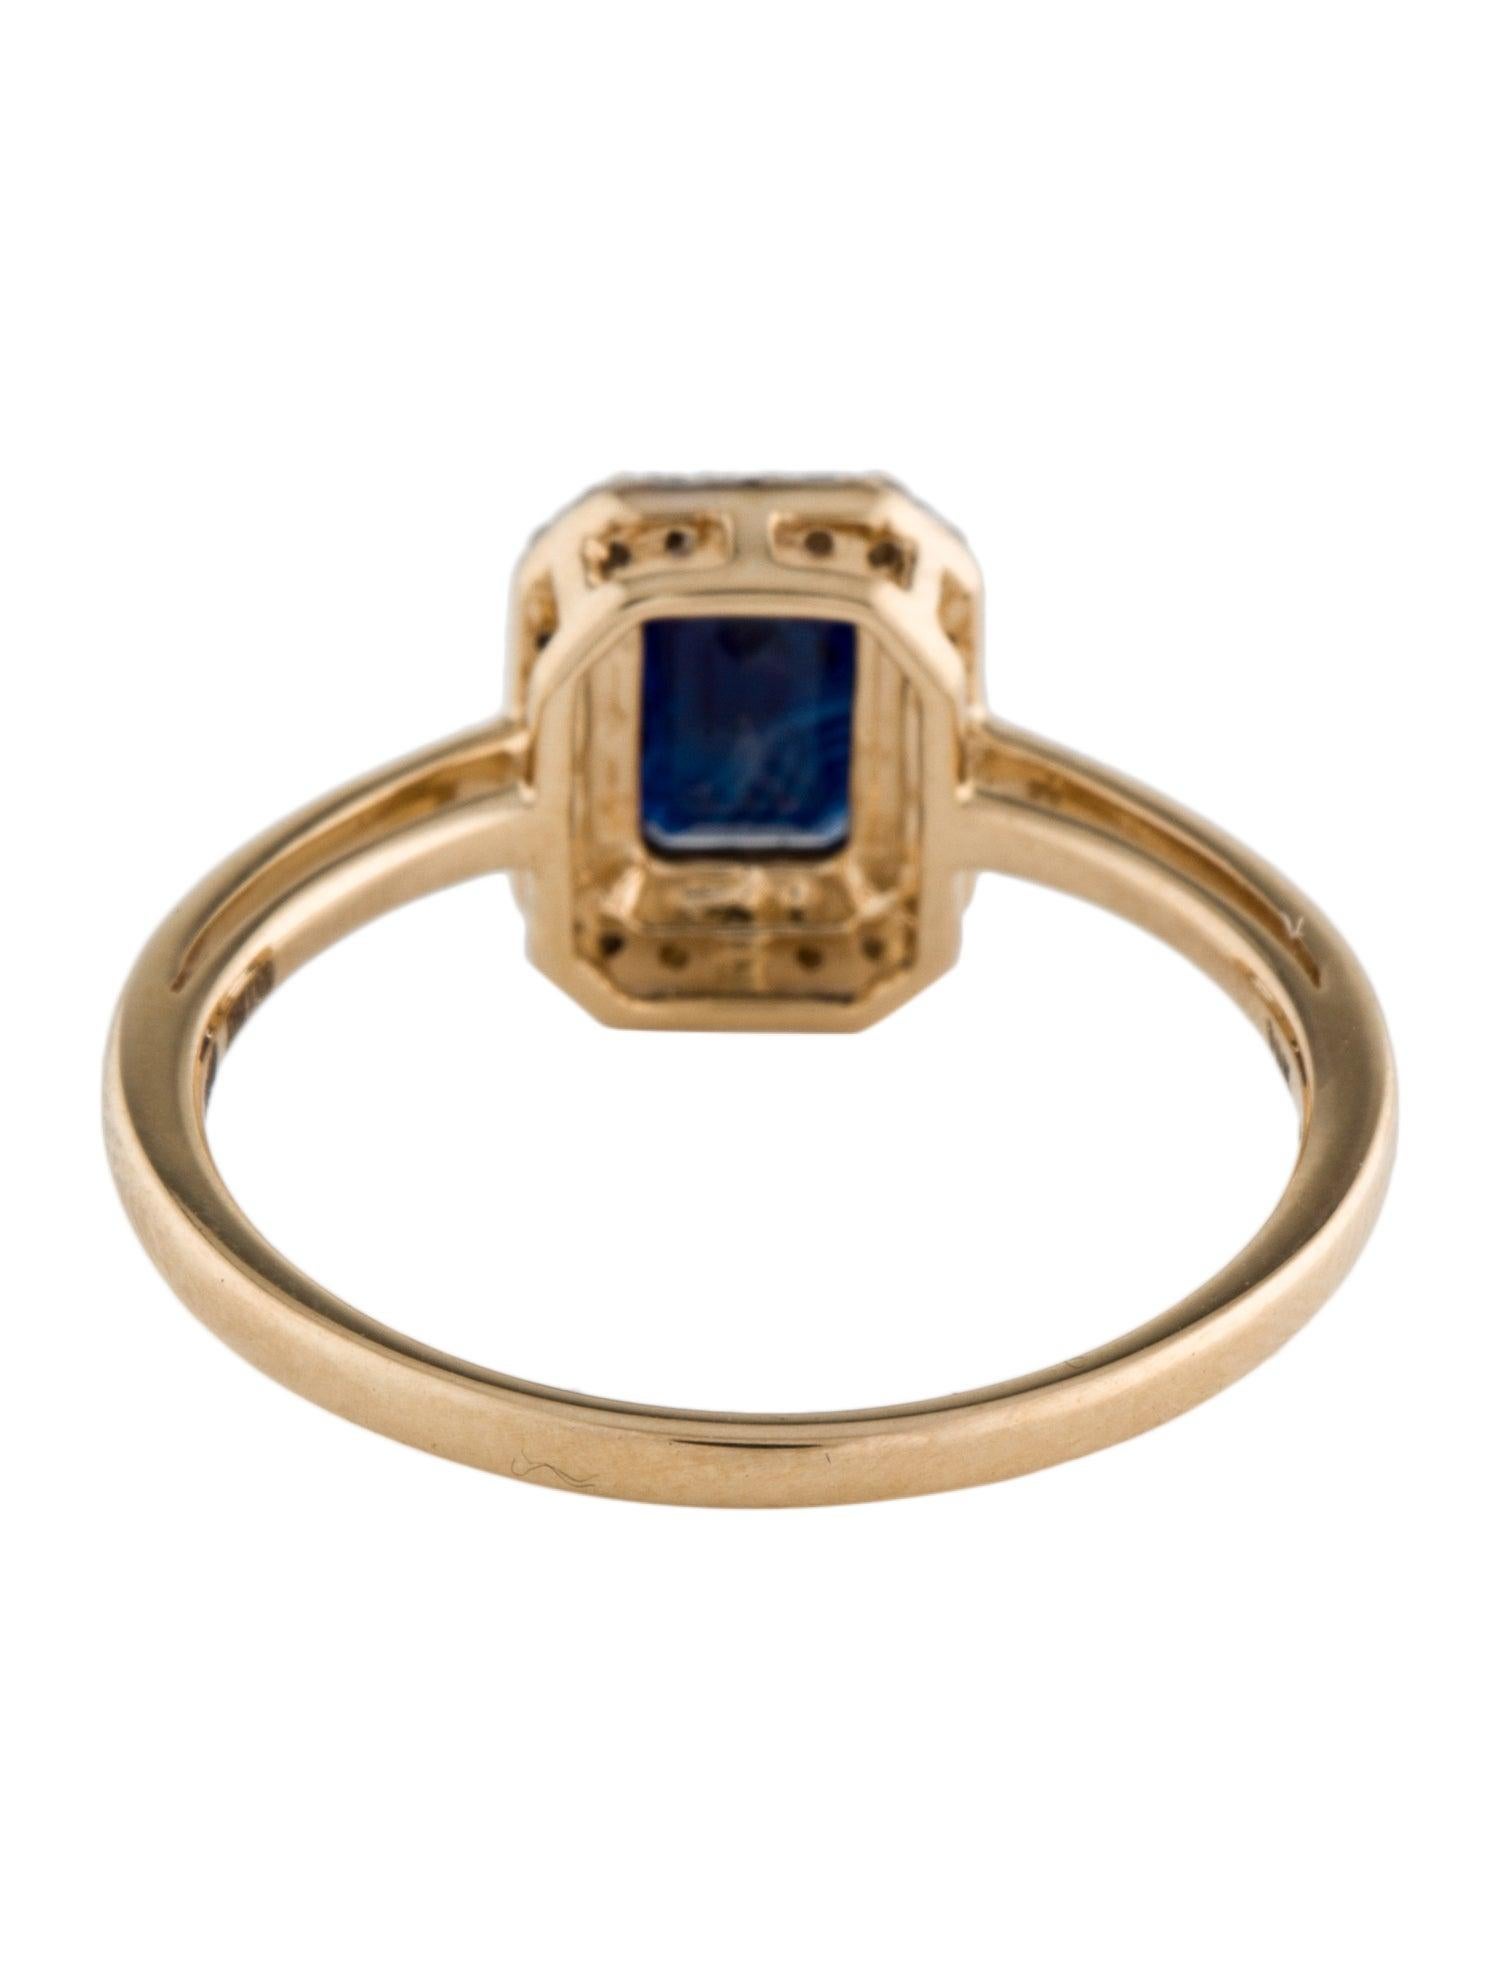 Women's Elegant 14K Yellow Gold Emerald Cut Sapphire & Diamond Cocktail Ring, 1.11ctw